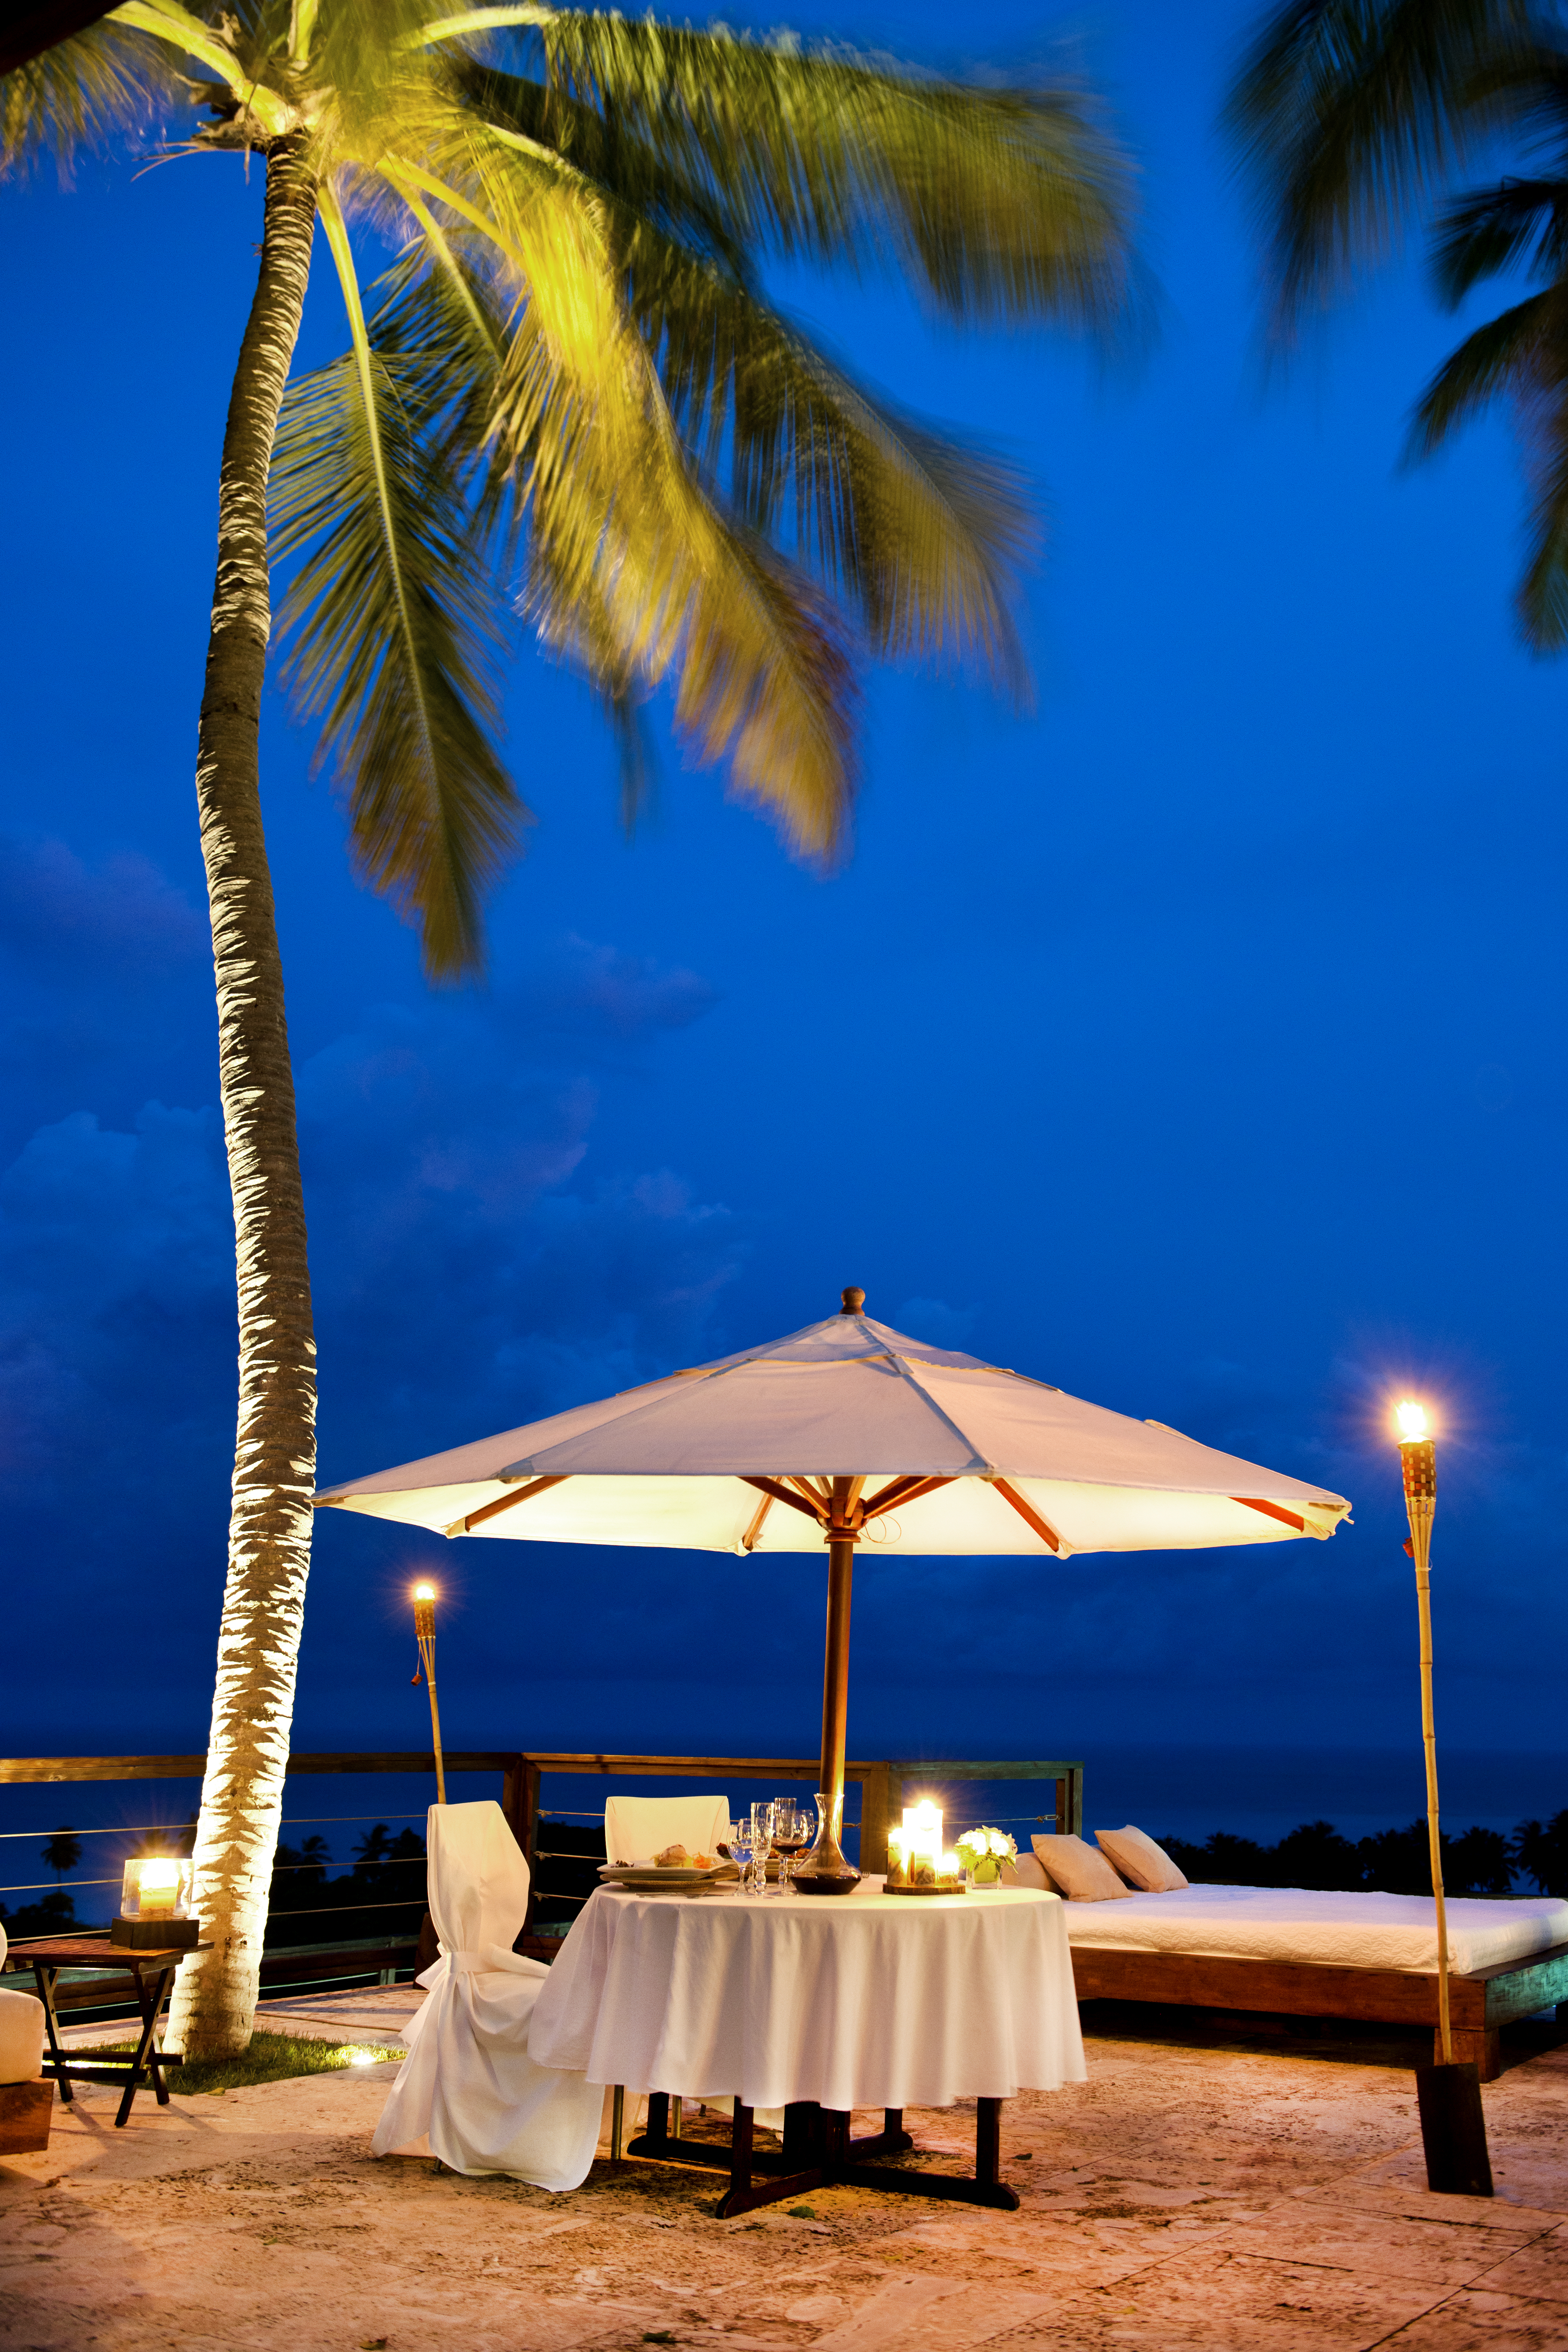 Best Private romantic dinner experiences | Casa Bonita Dominican Republic